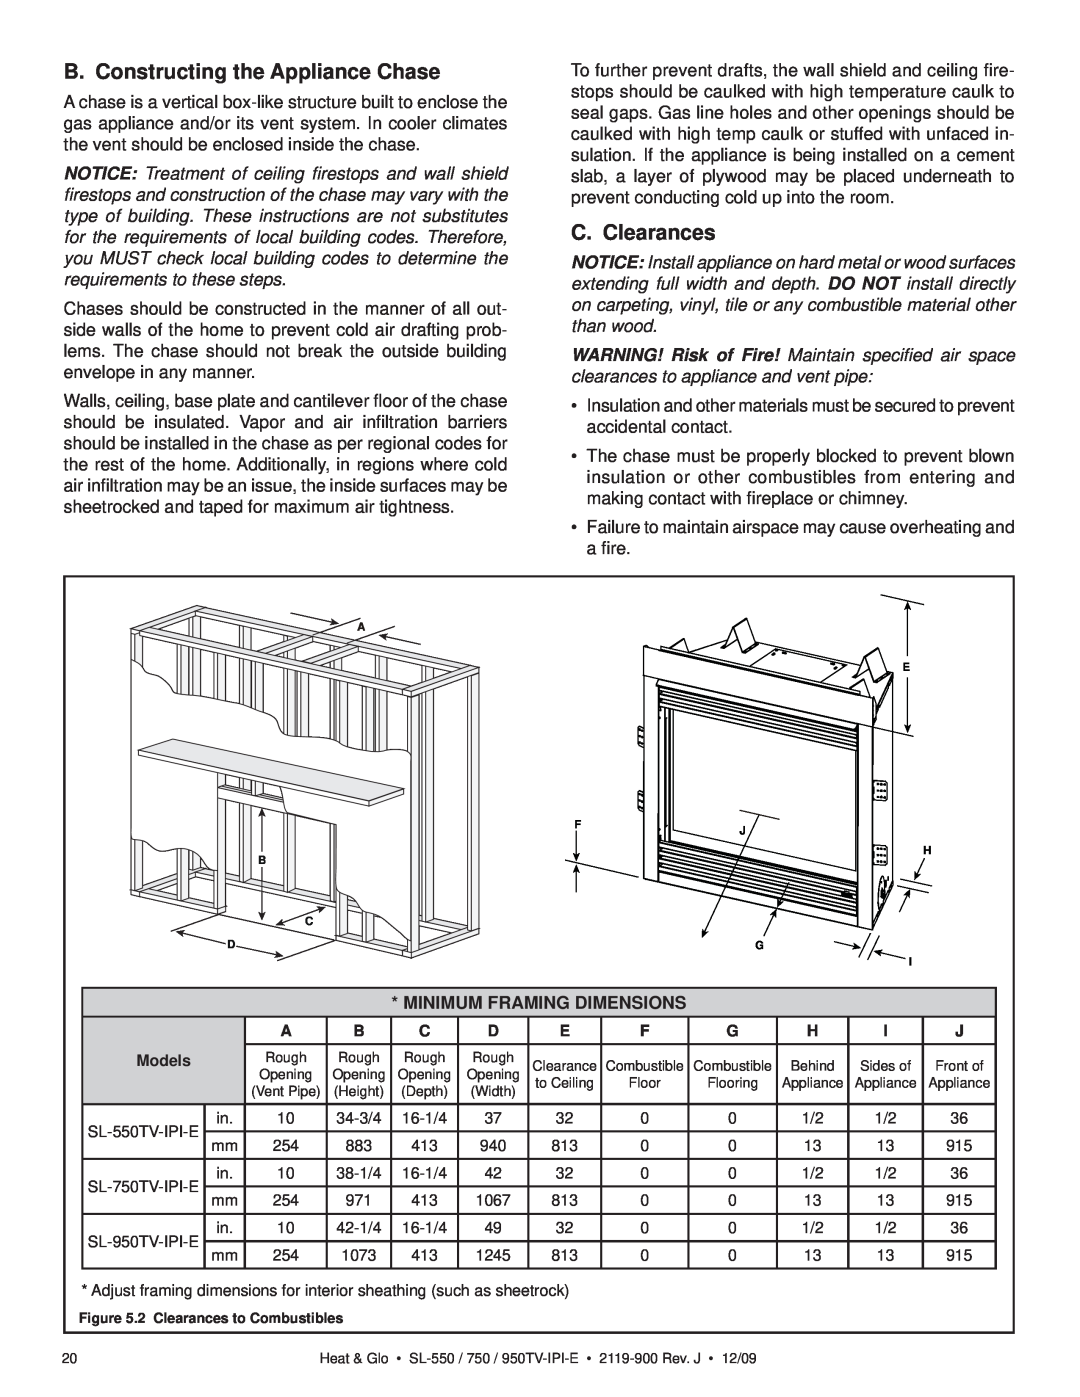 Heat & Glo LifeStyle SL-550TV-IPI-E B. Constructing the Appliance Chase, C. Clearances, Minimum Framing Dimensions 